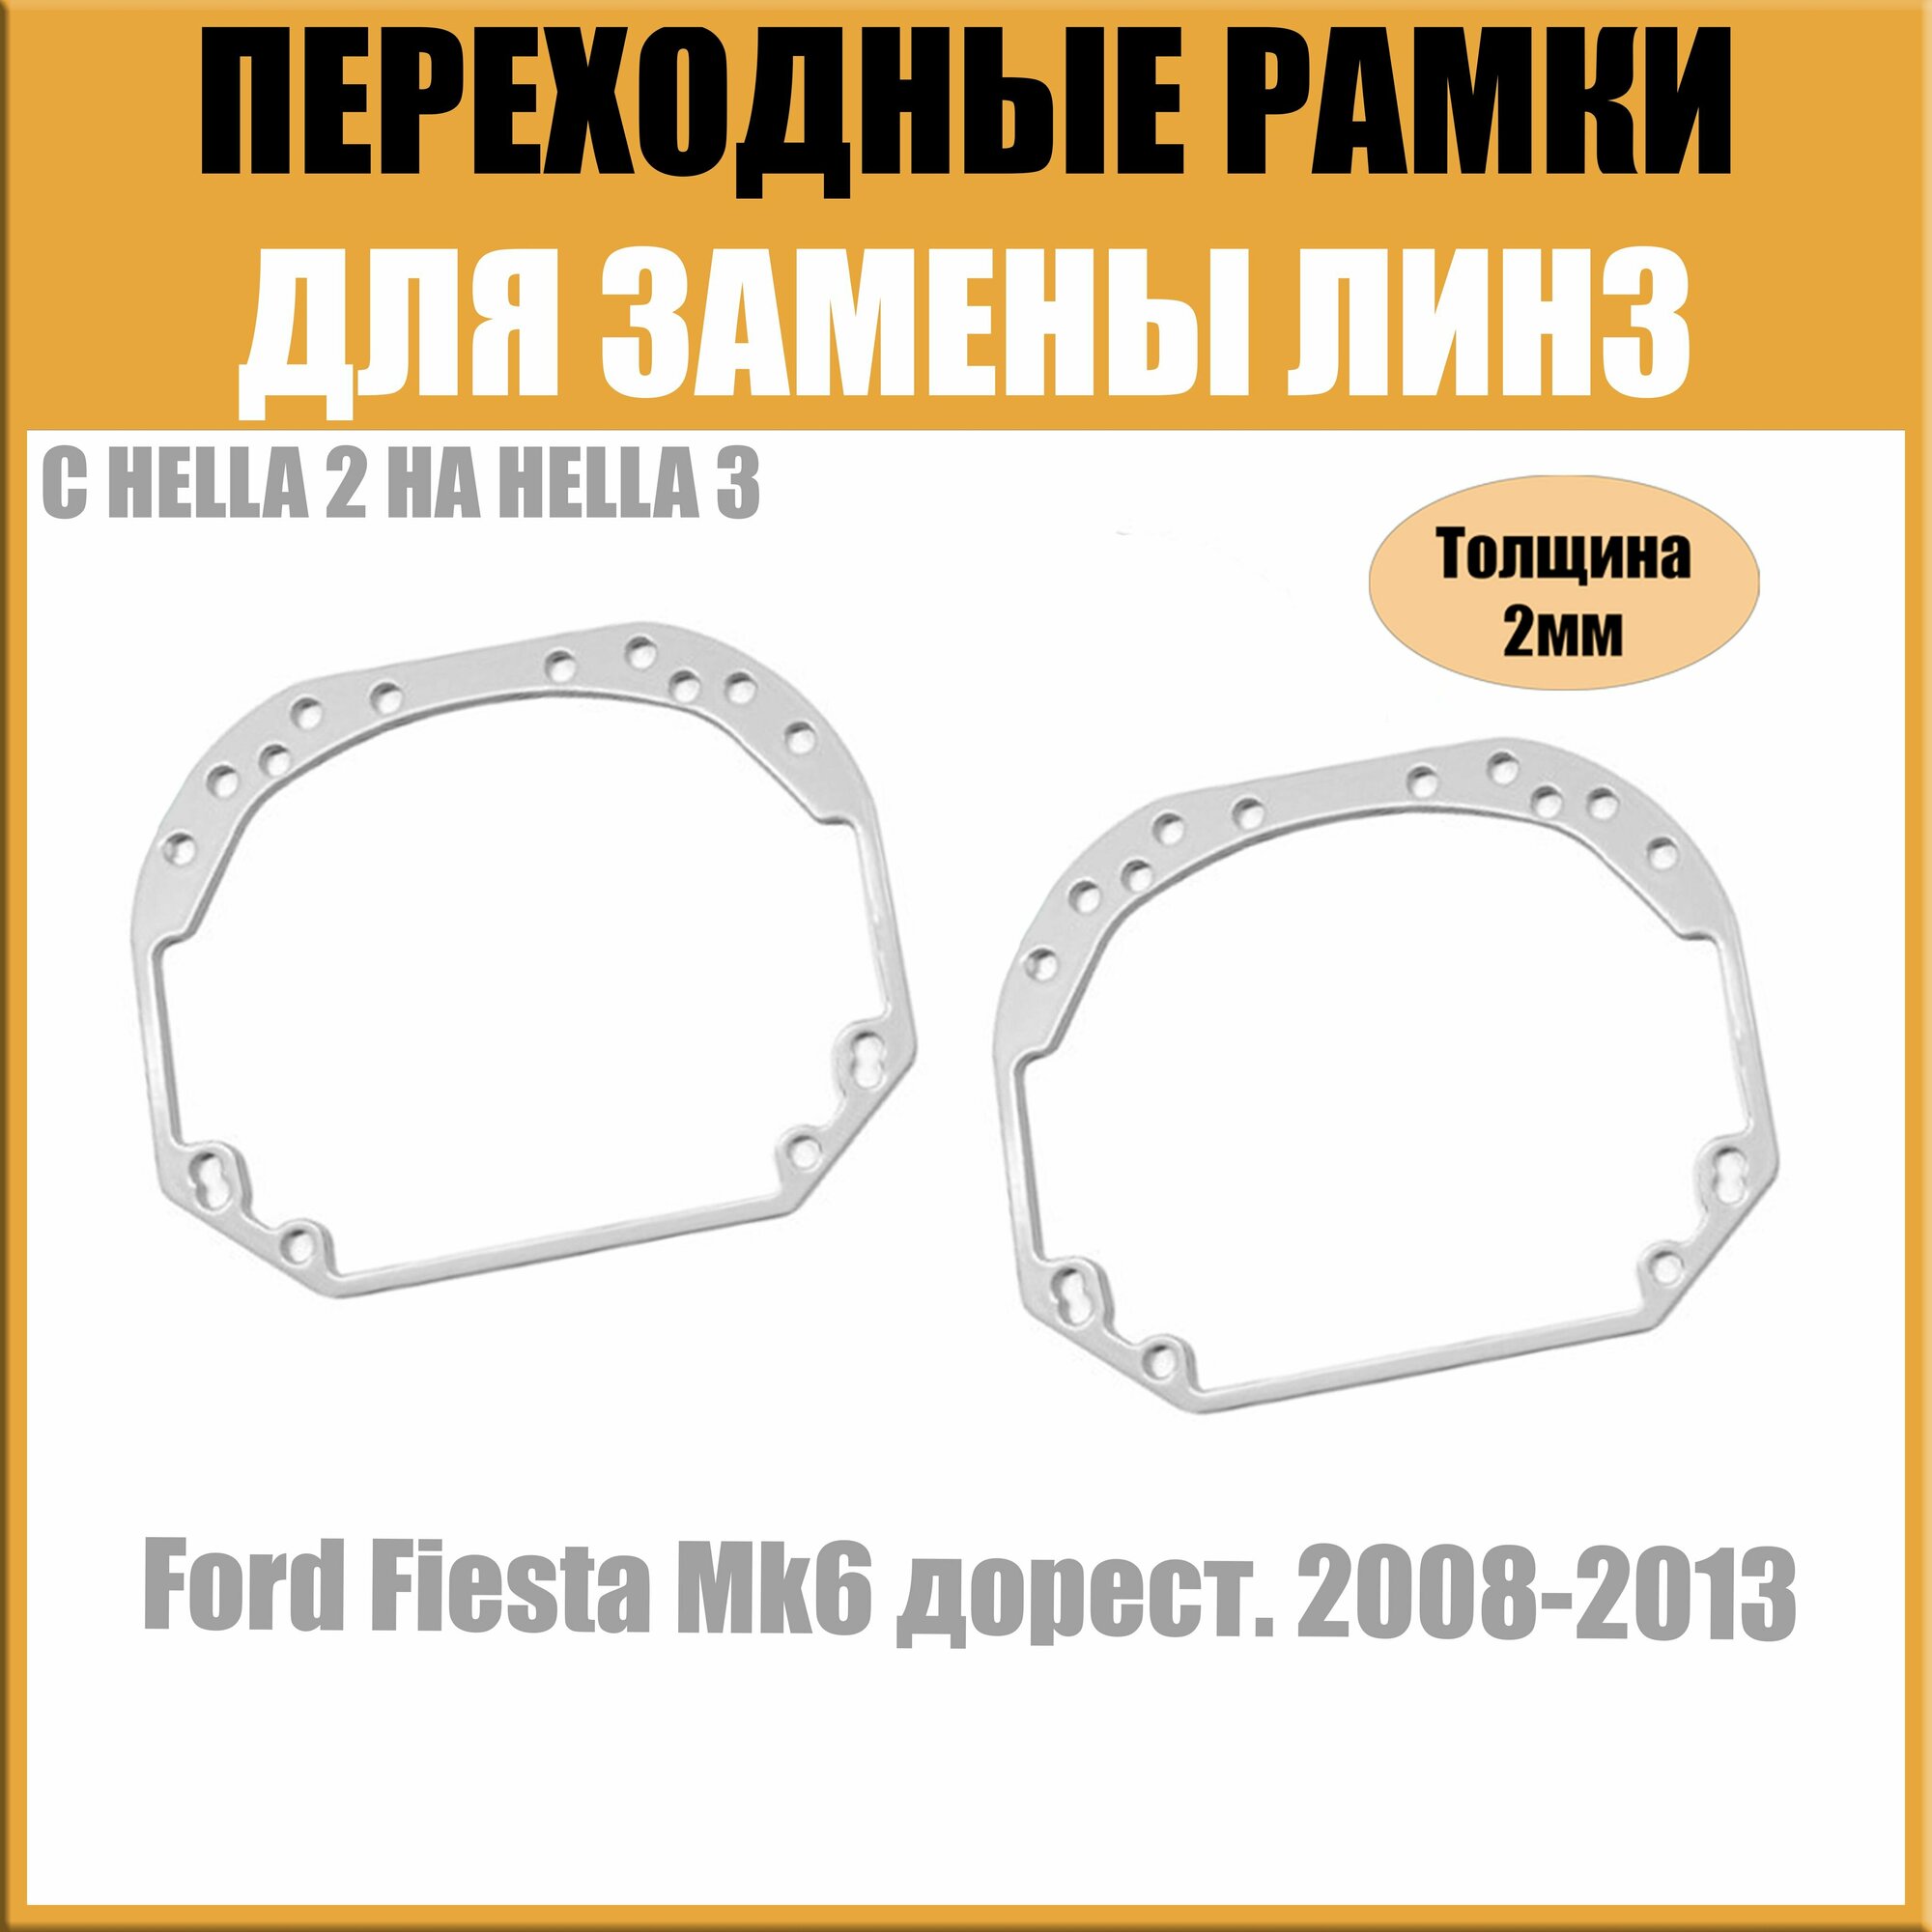 Переходные рамки для линз №1 на Ford Fiesta Mk6 дорест. 2008-2013 под модуль Hella 3R/Hella 3 (Комплект 2шт)